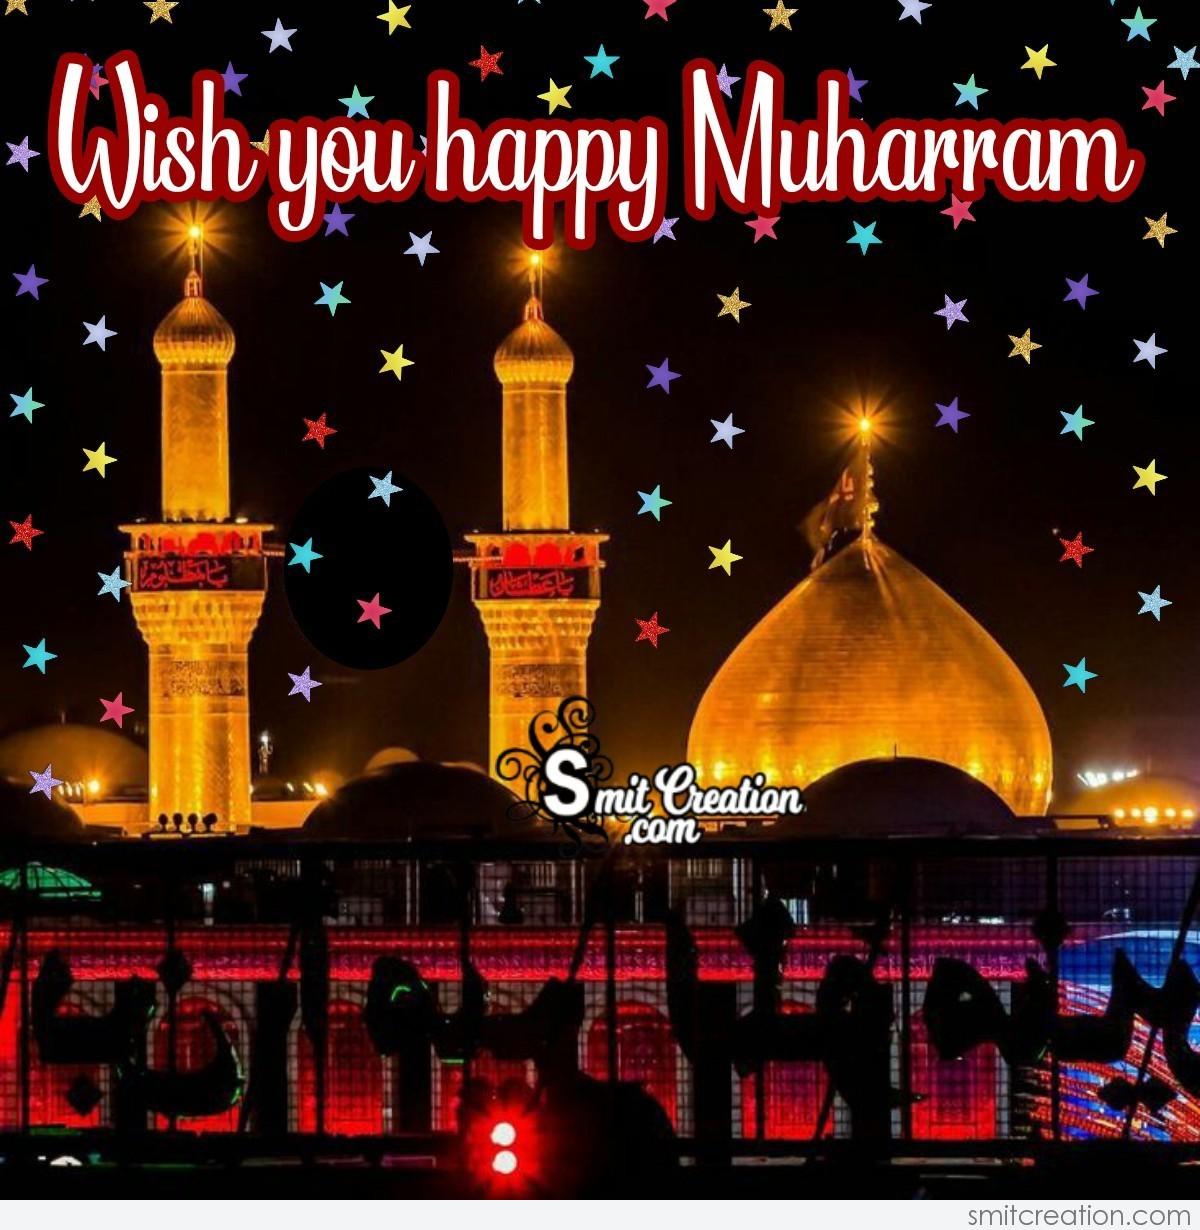 Wish You Happy Muharram - SmitCreation.com